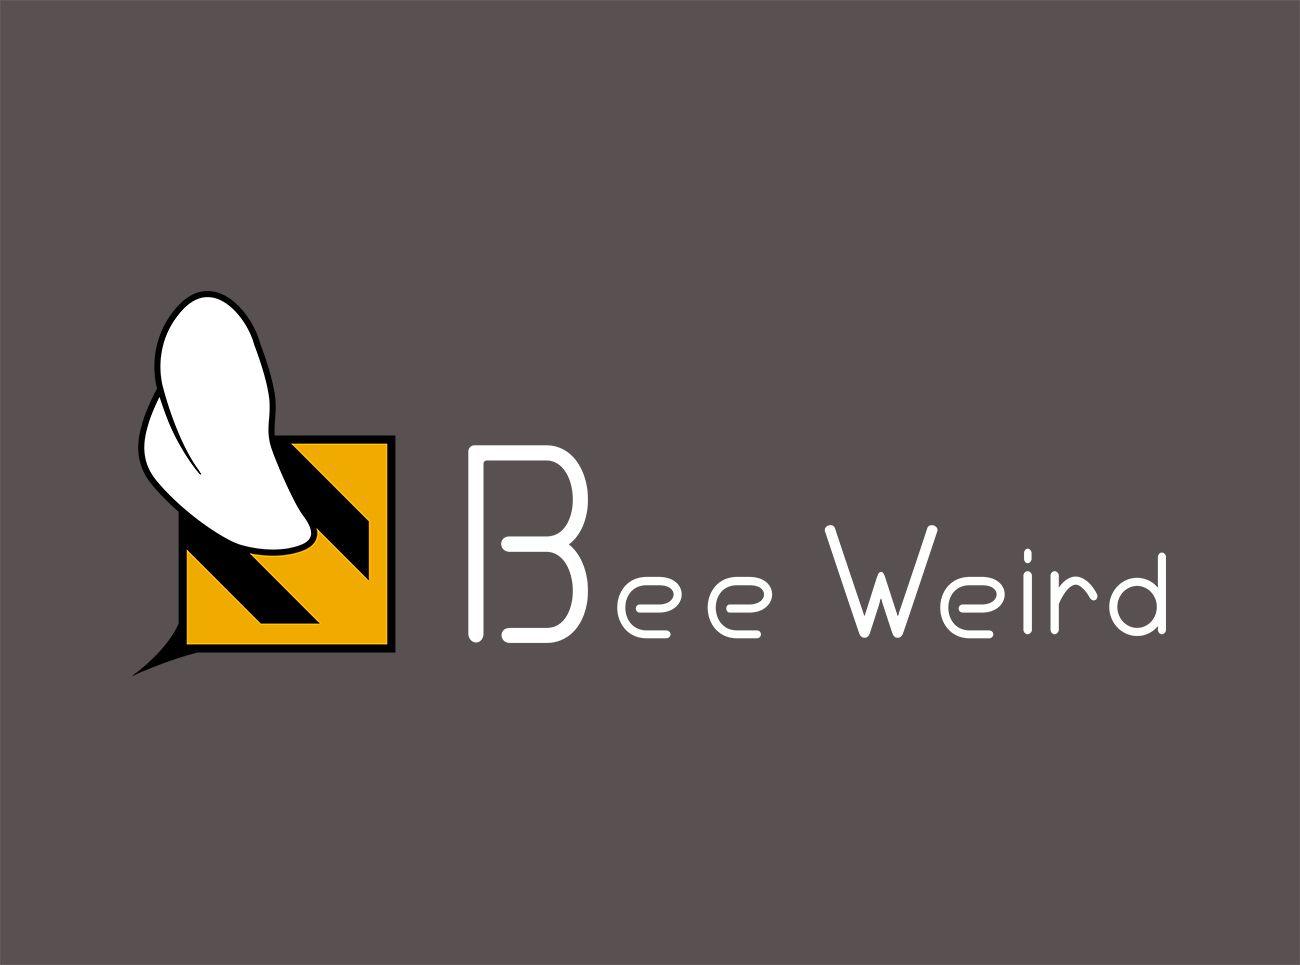 Weird Company Logo - Bold, Serious Logo Design for Bee Wierd Enterprises